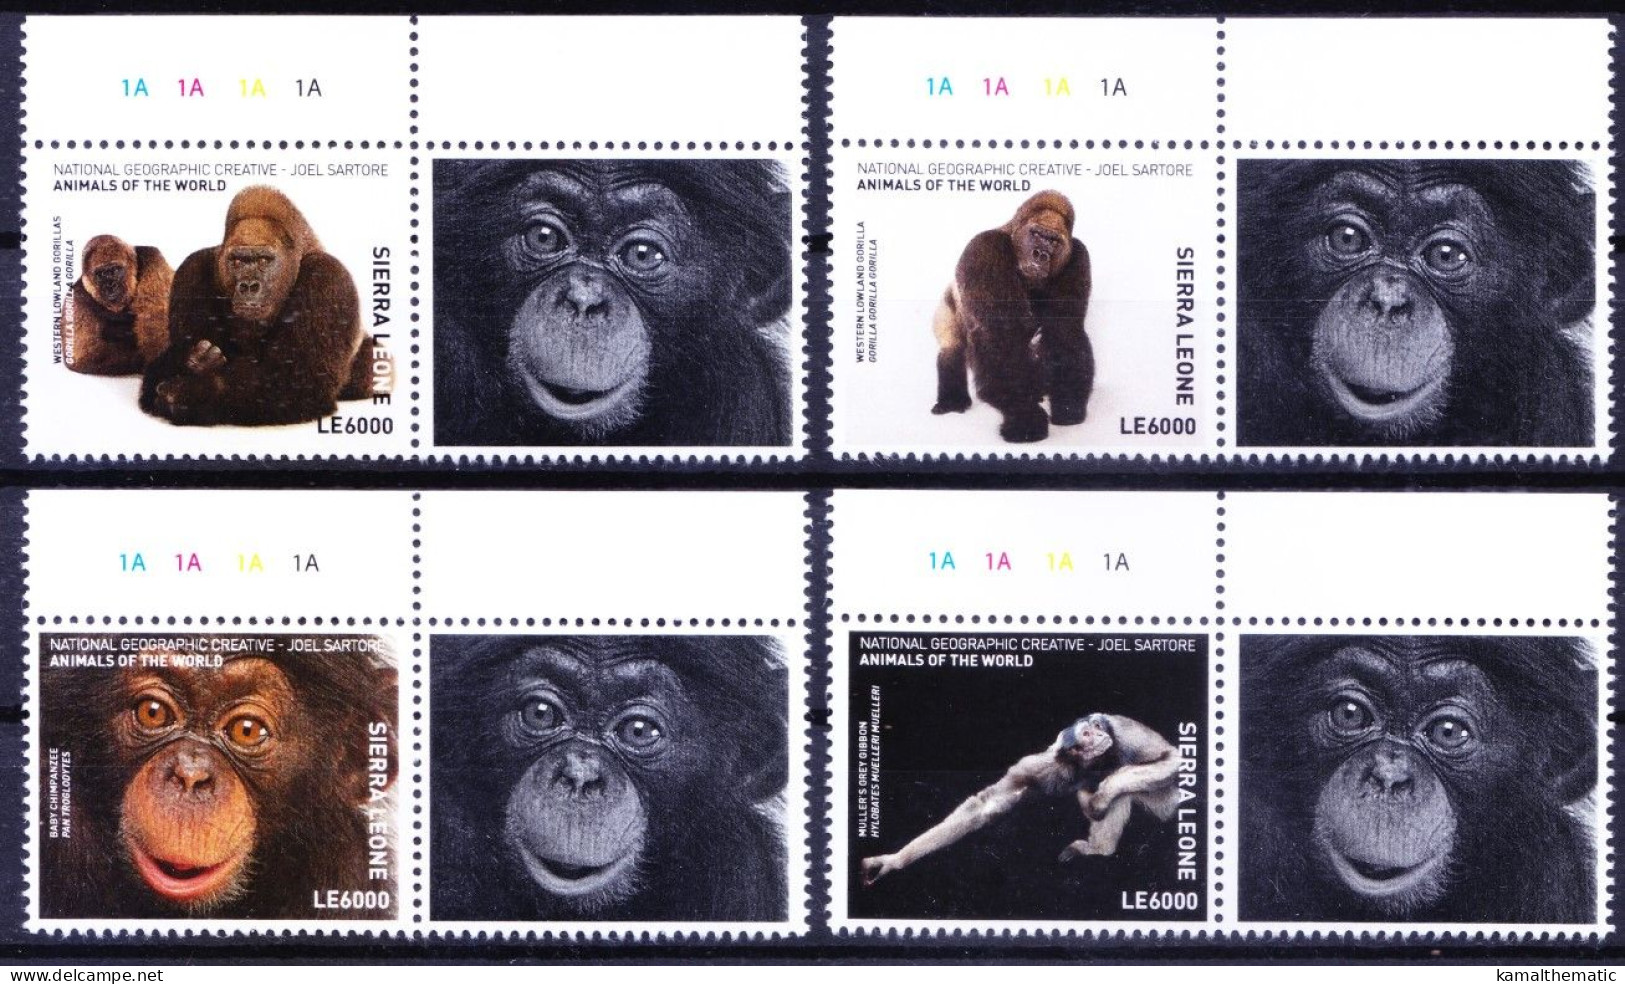 Apes Orangutan Gorilla, Monkeys, Sierra Leone 2017 MNH 4v+Label Color Guide (a), Wild Animals - Gorilla